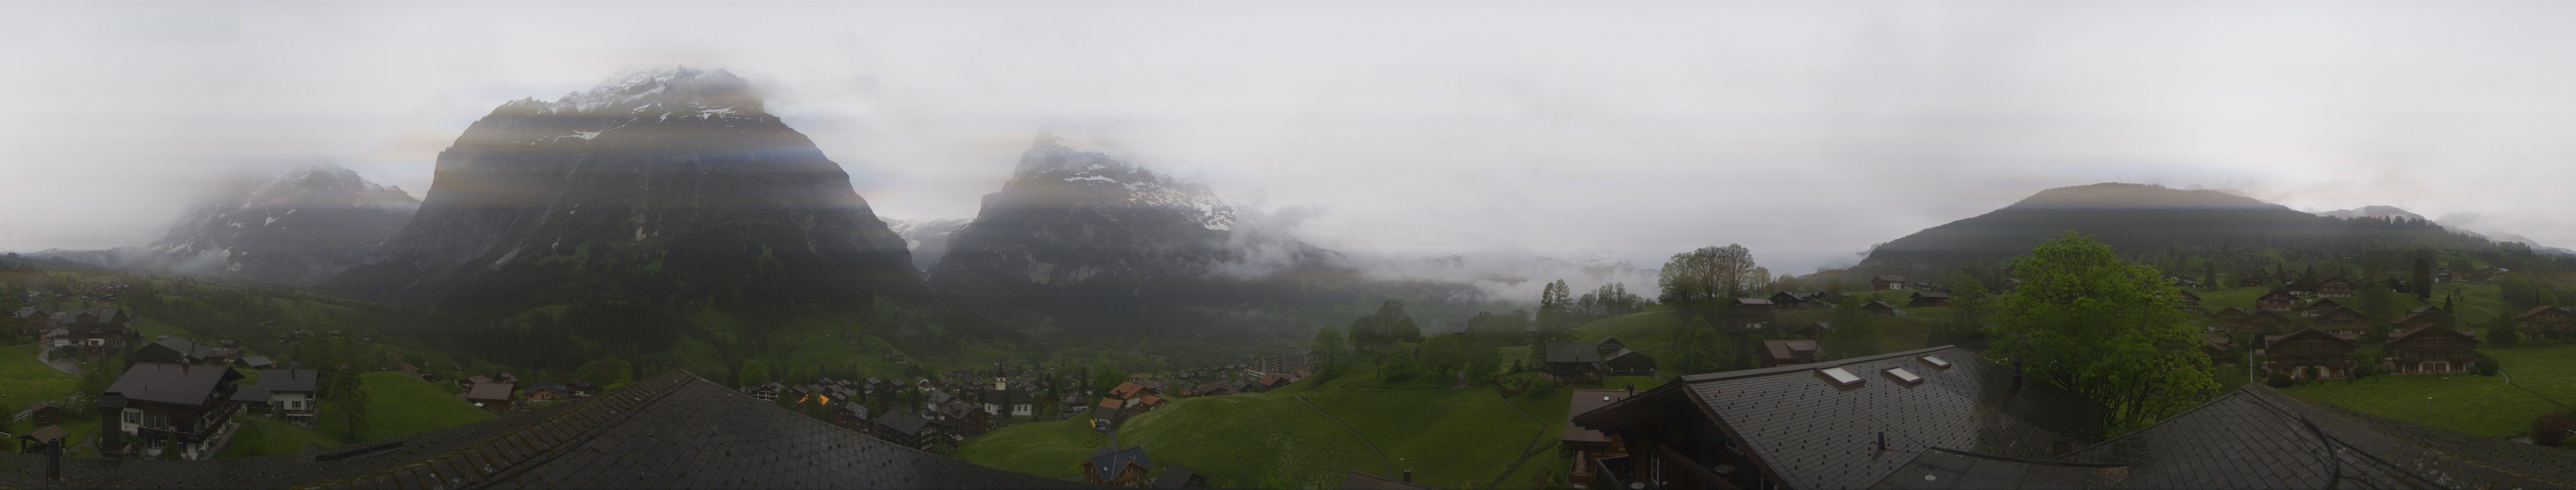 Grindelwald: Kirchbühl